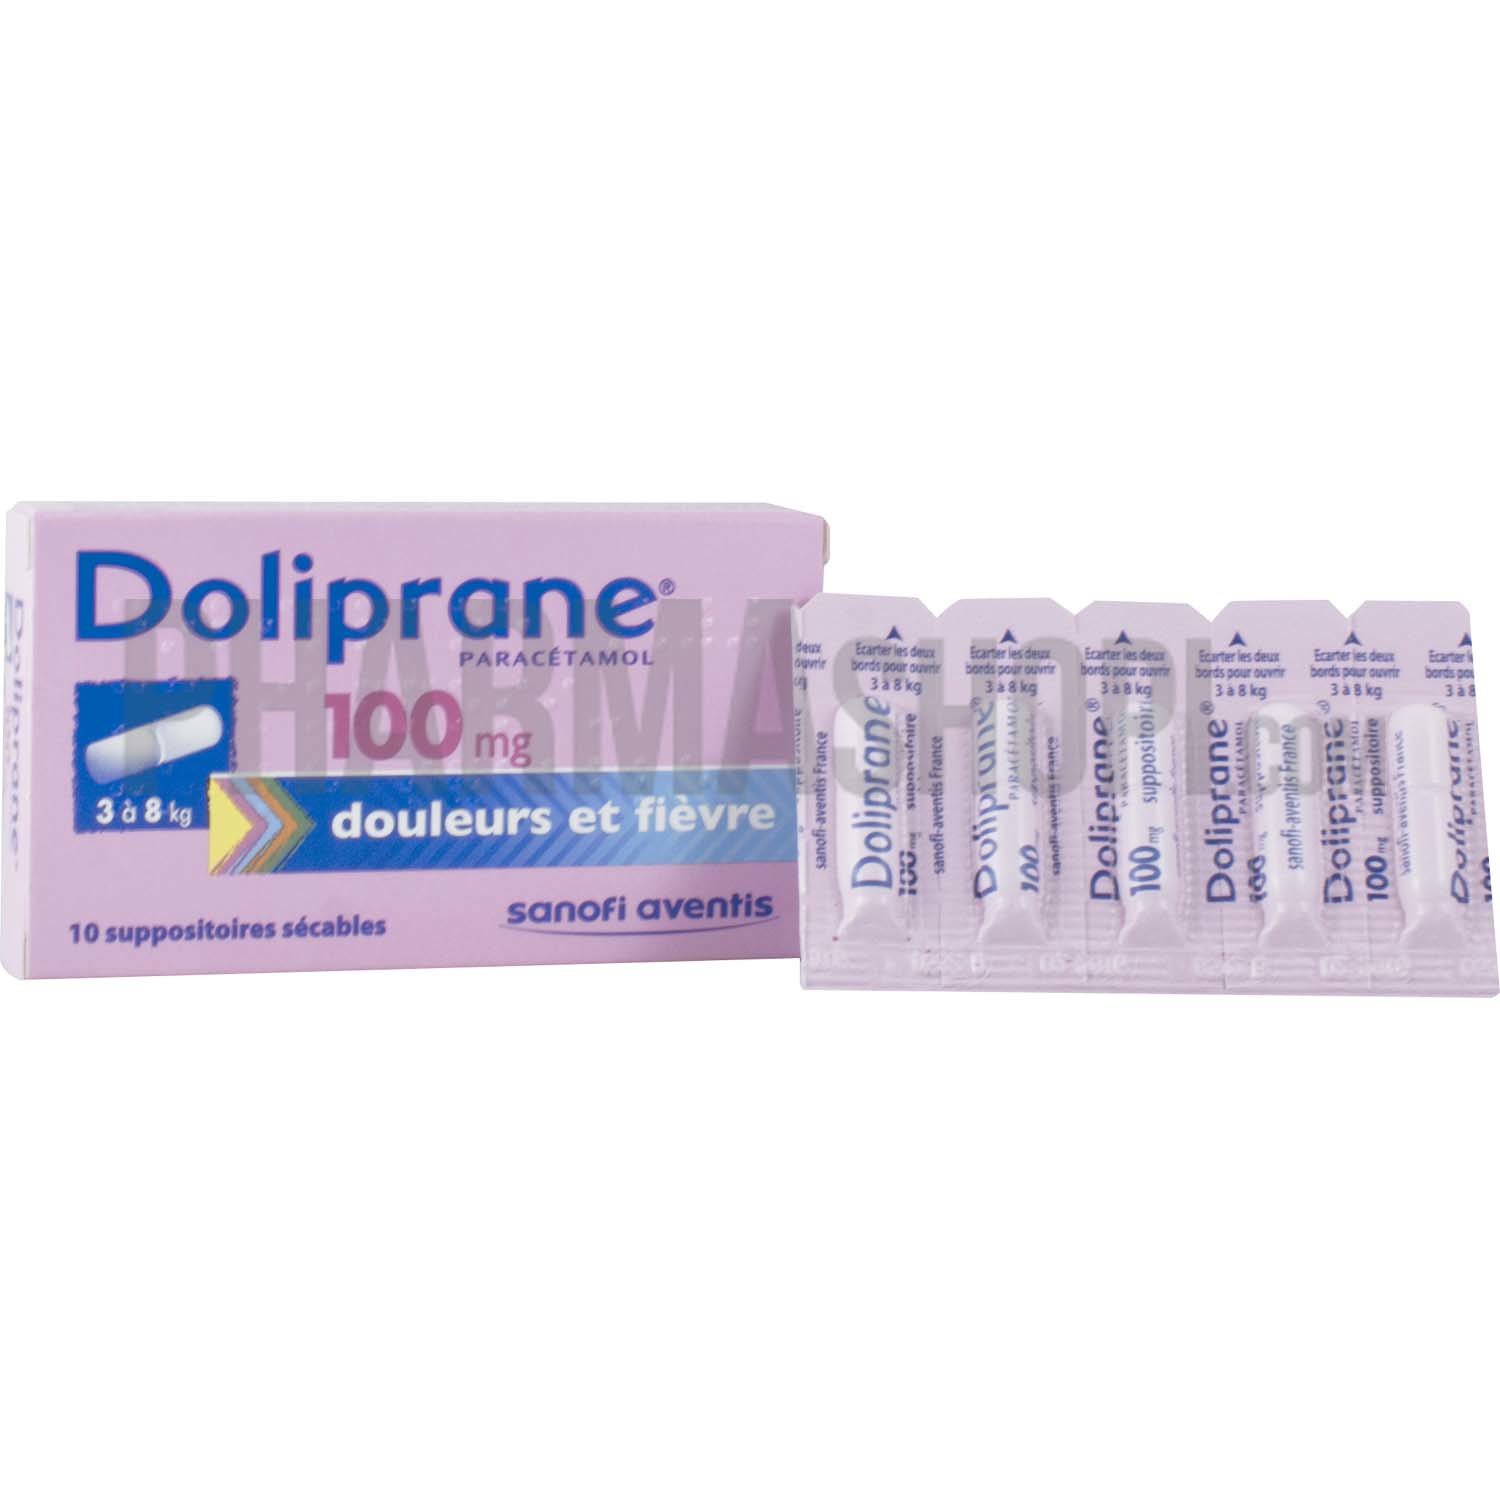 Doliprane 100mg Suppositoire Secable Boite De 10 Suppositoires